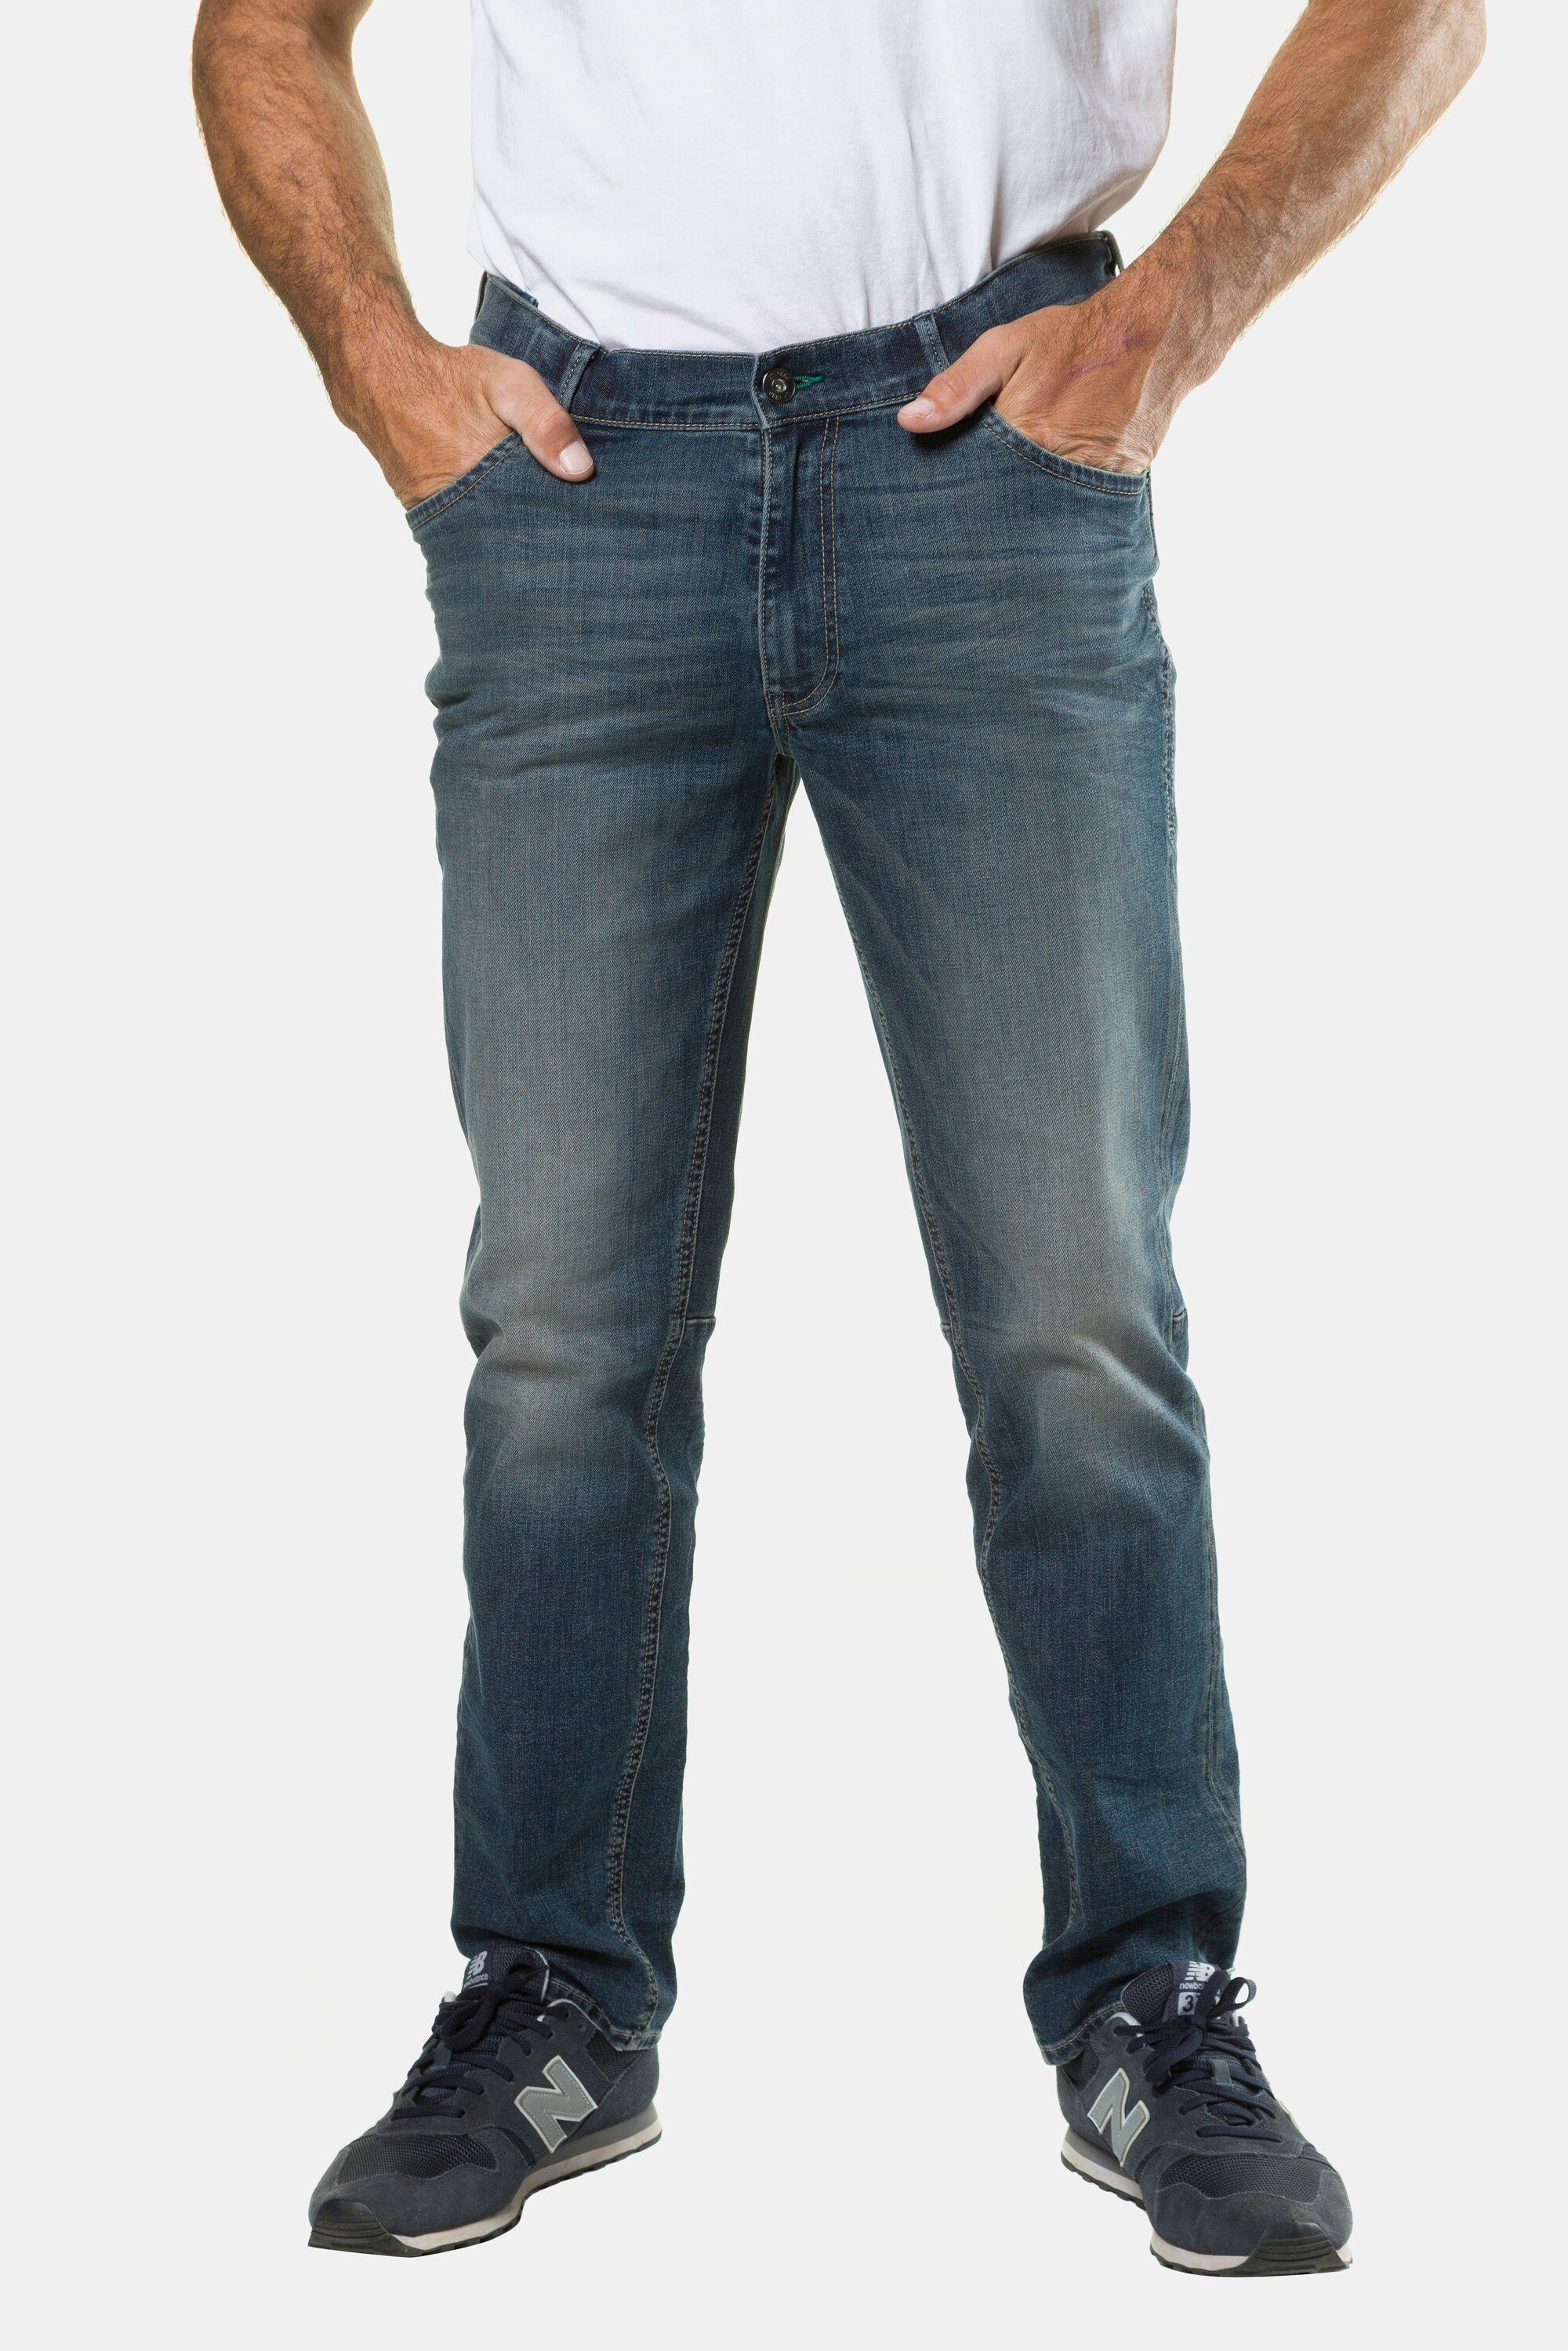 JP1880 Cargohose Jeans Denim Traveller-Bund Straight Fit blue stone